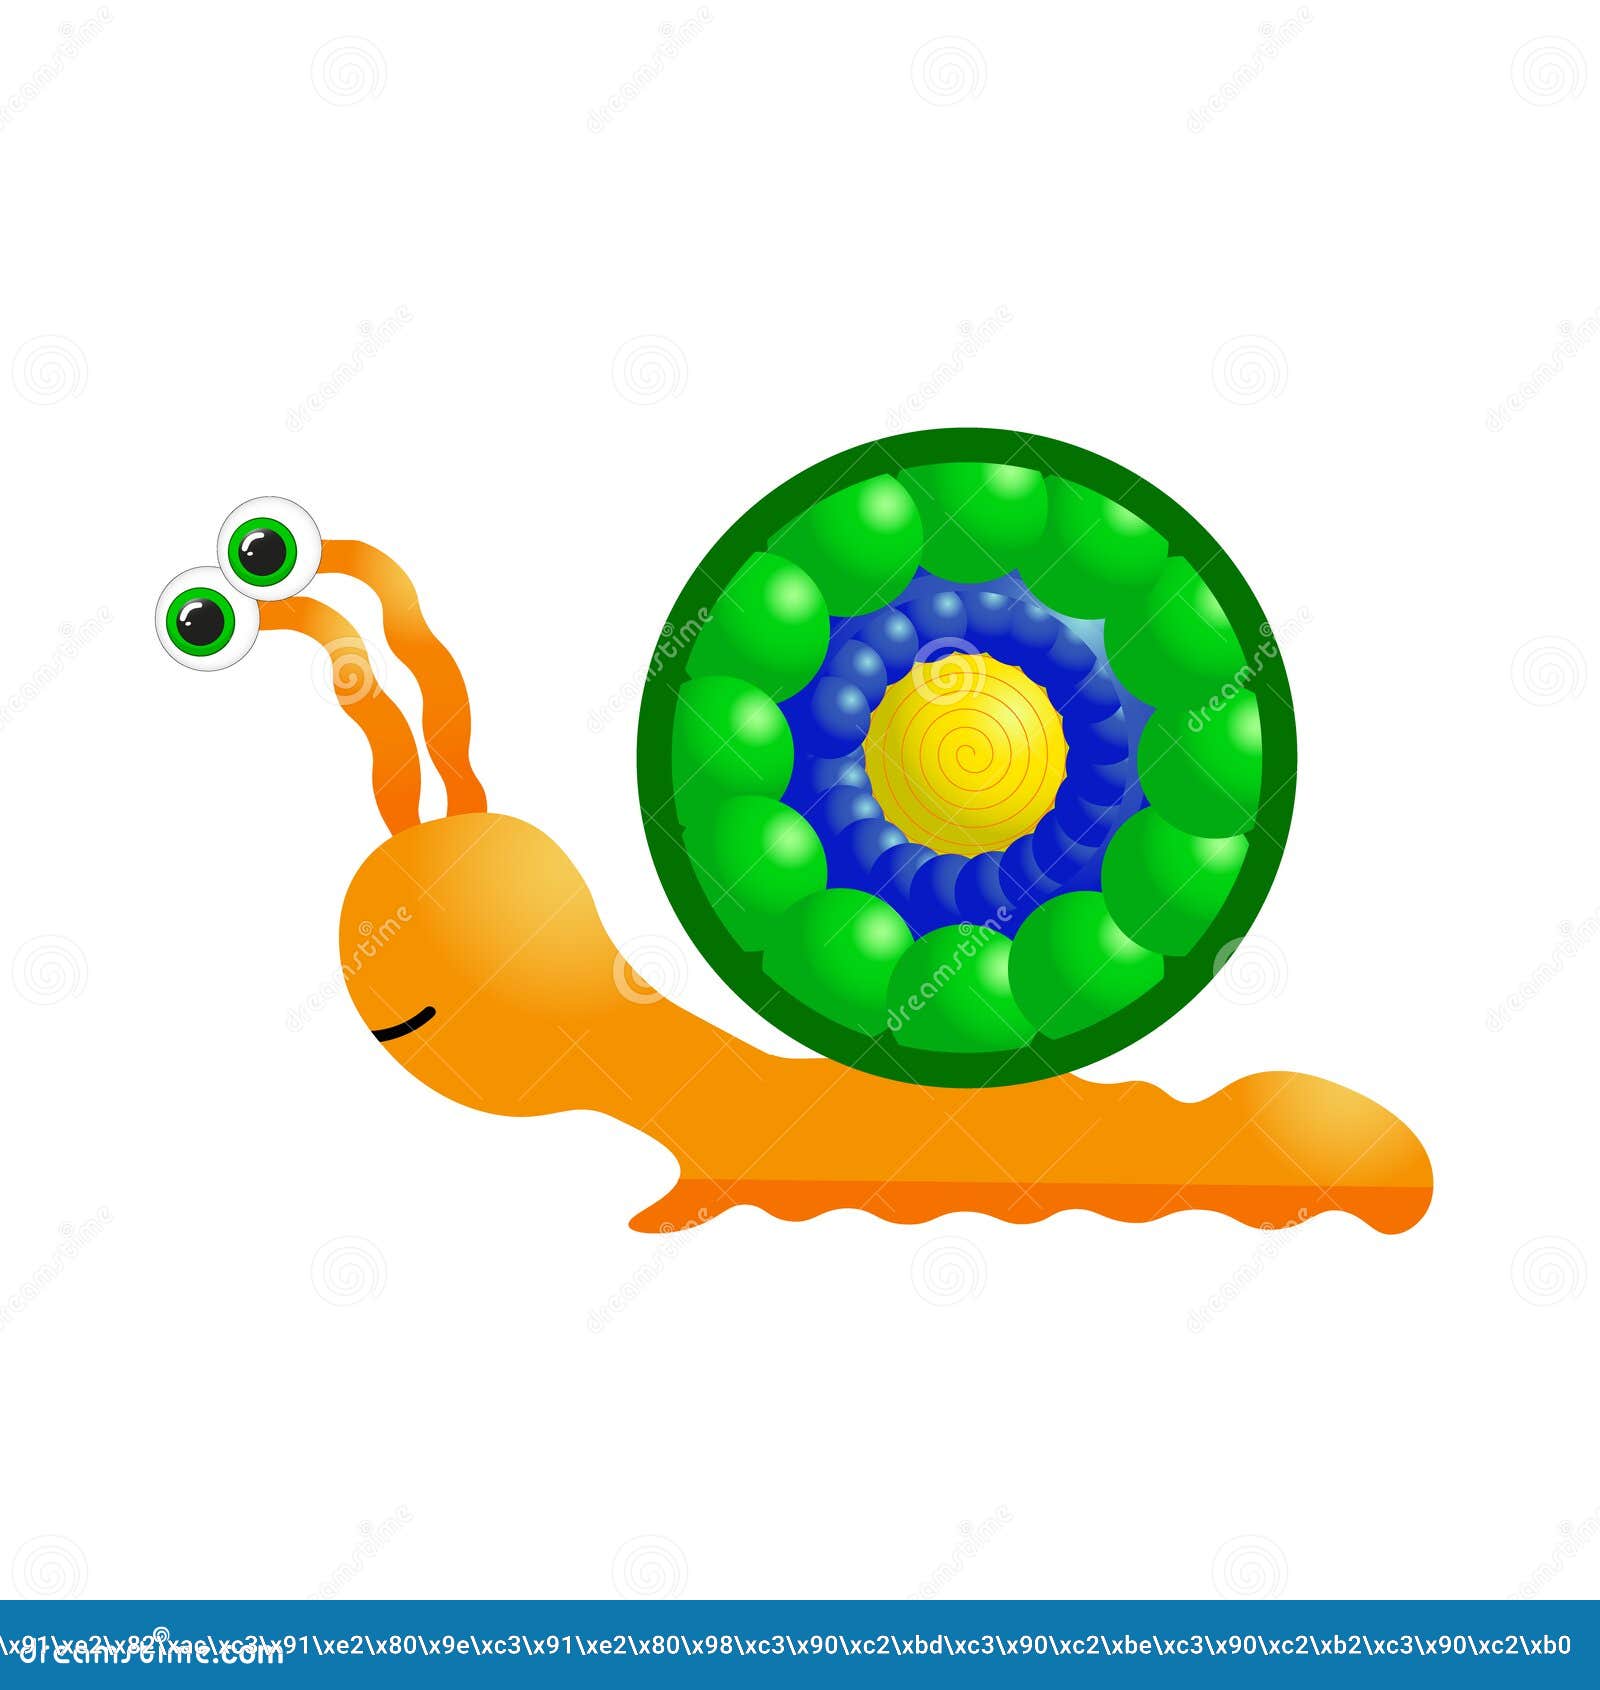 Cute Cartoon Illustration of a Snail. Colorful Snail, Vector. Stock ...